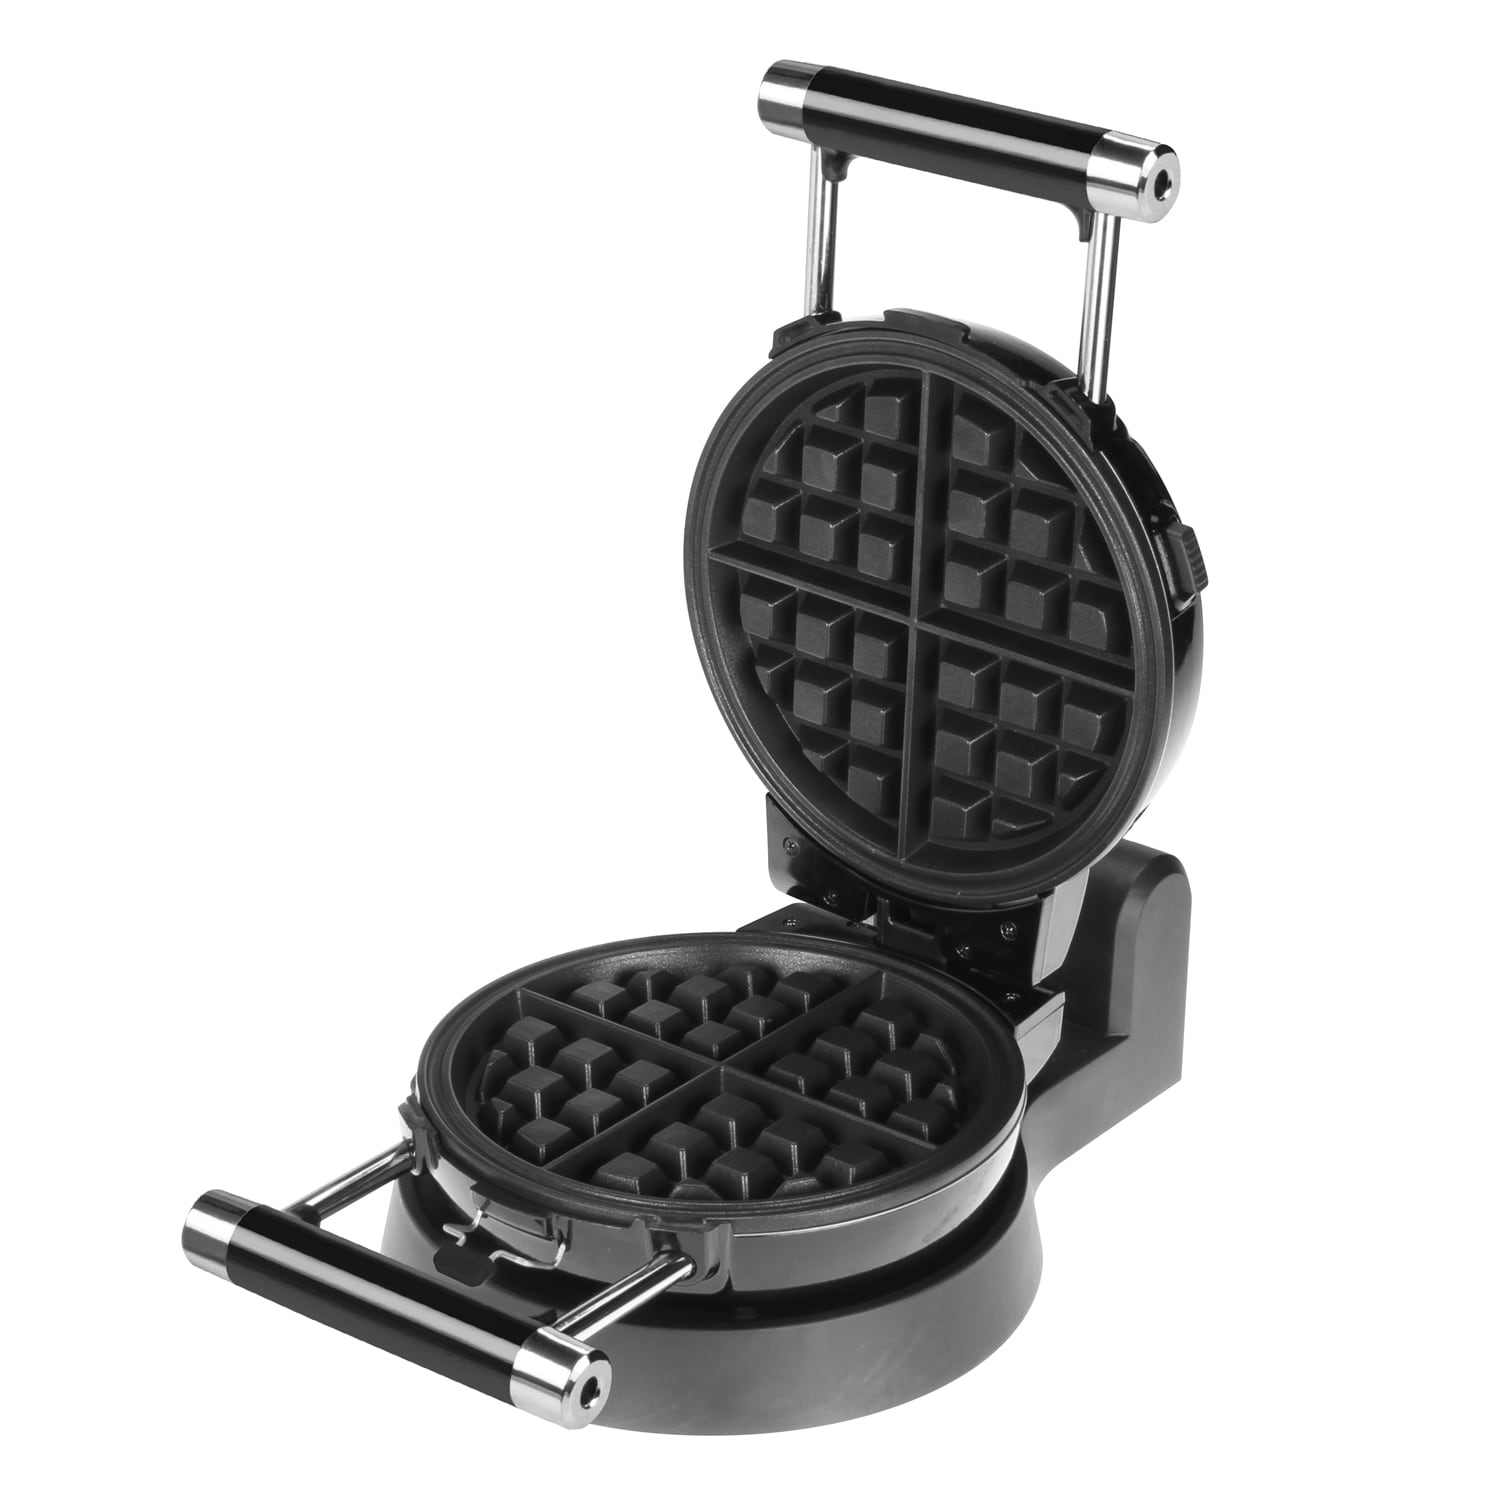 Kalorik Belgian Waffle Maker, Black and Stainless Steel - 20243154